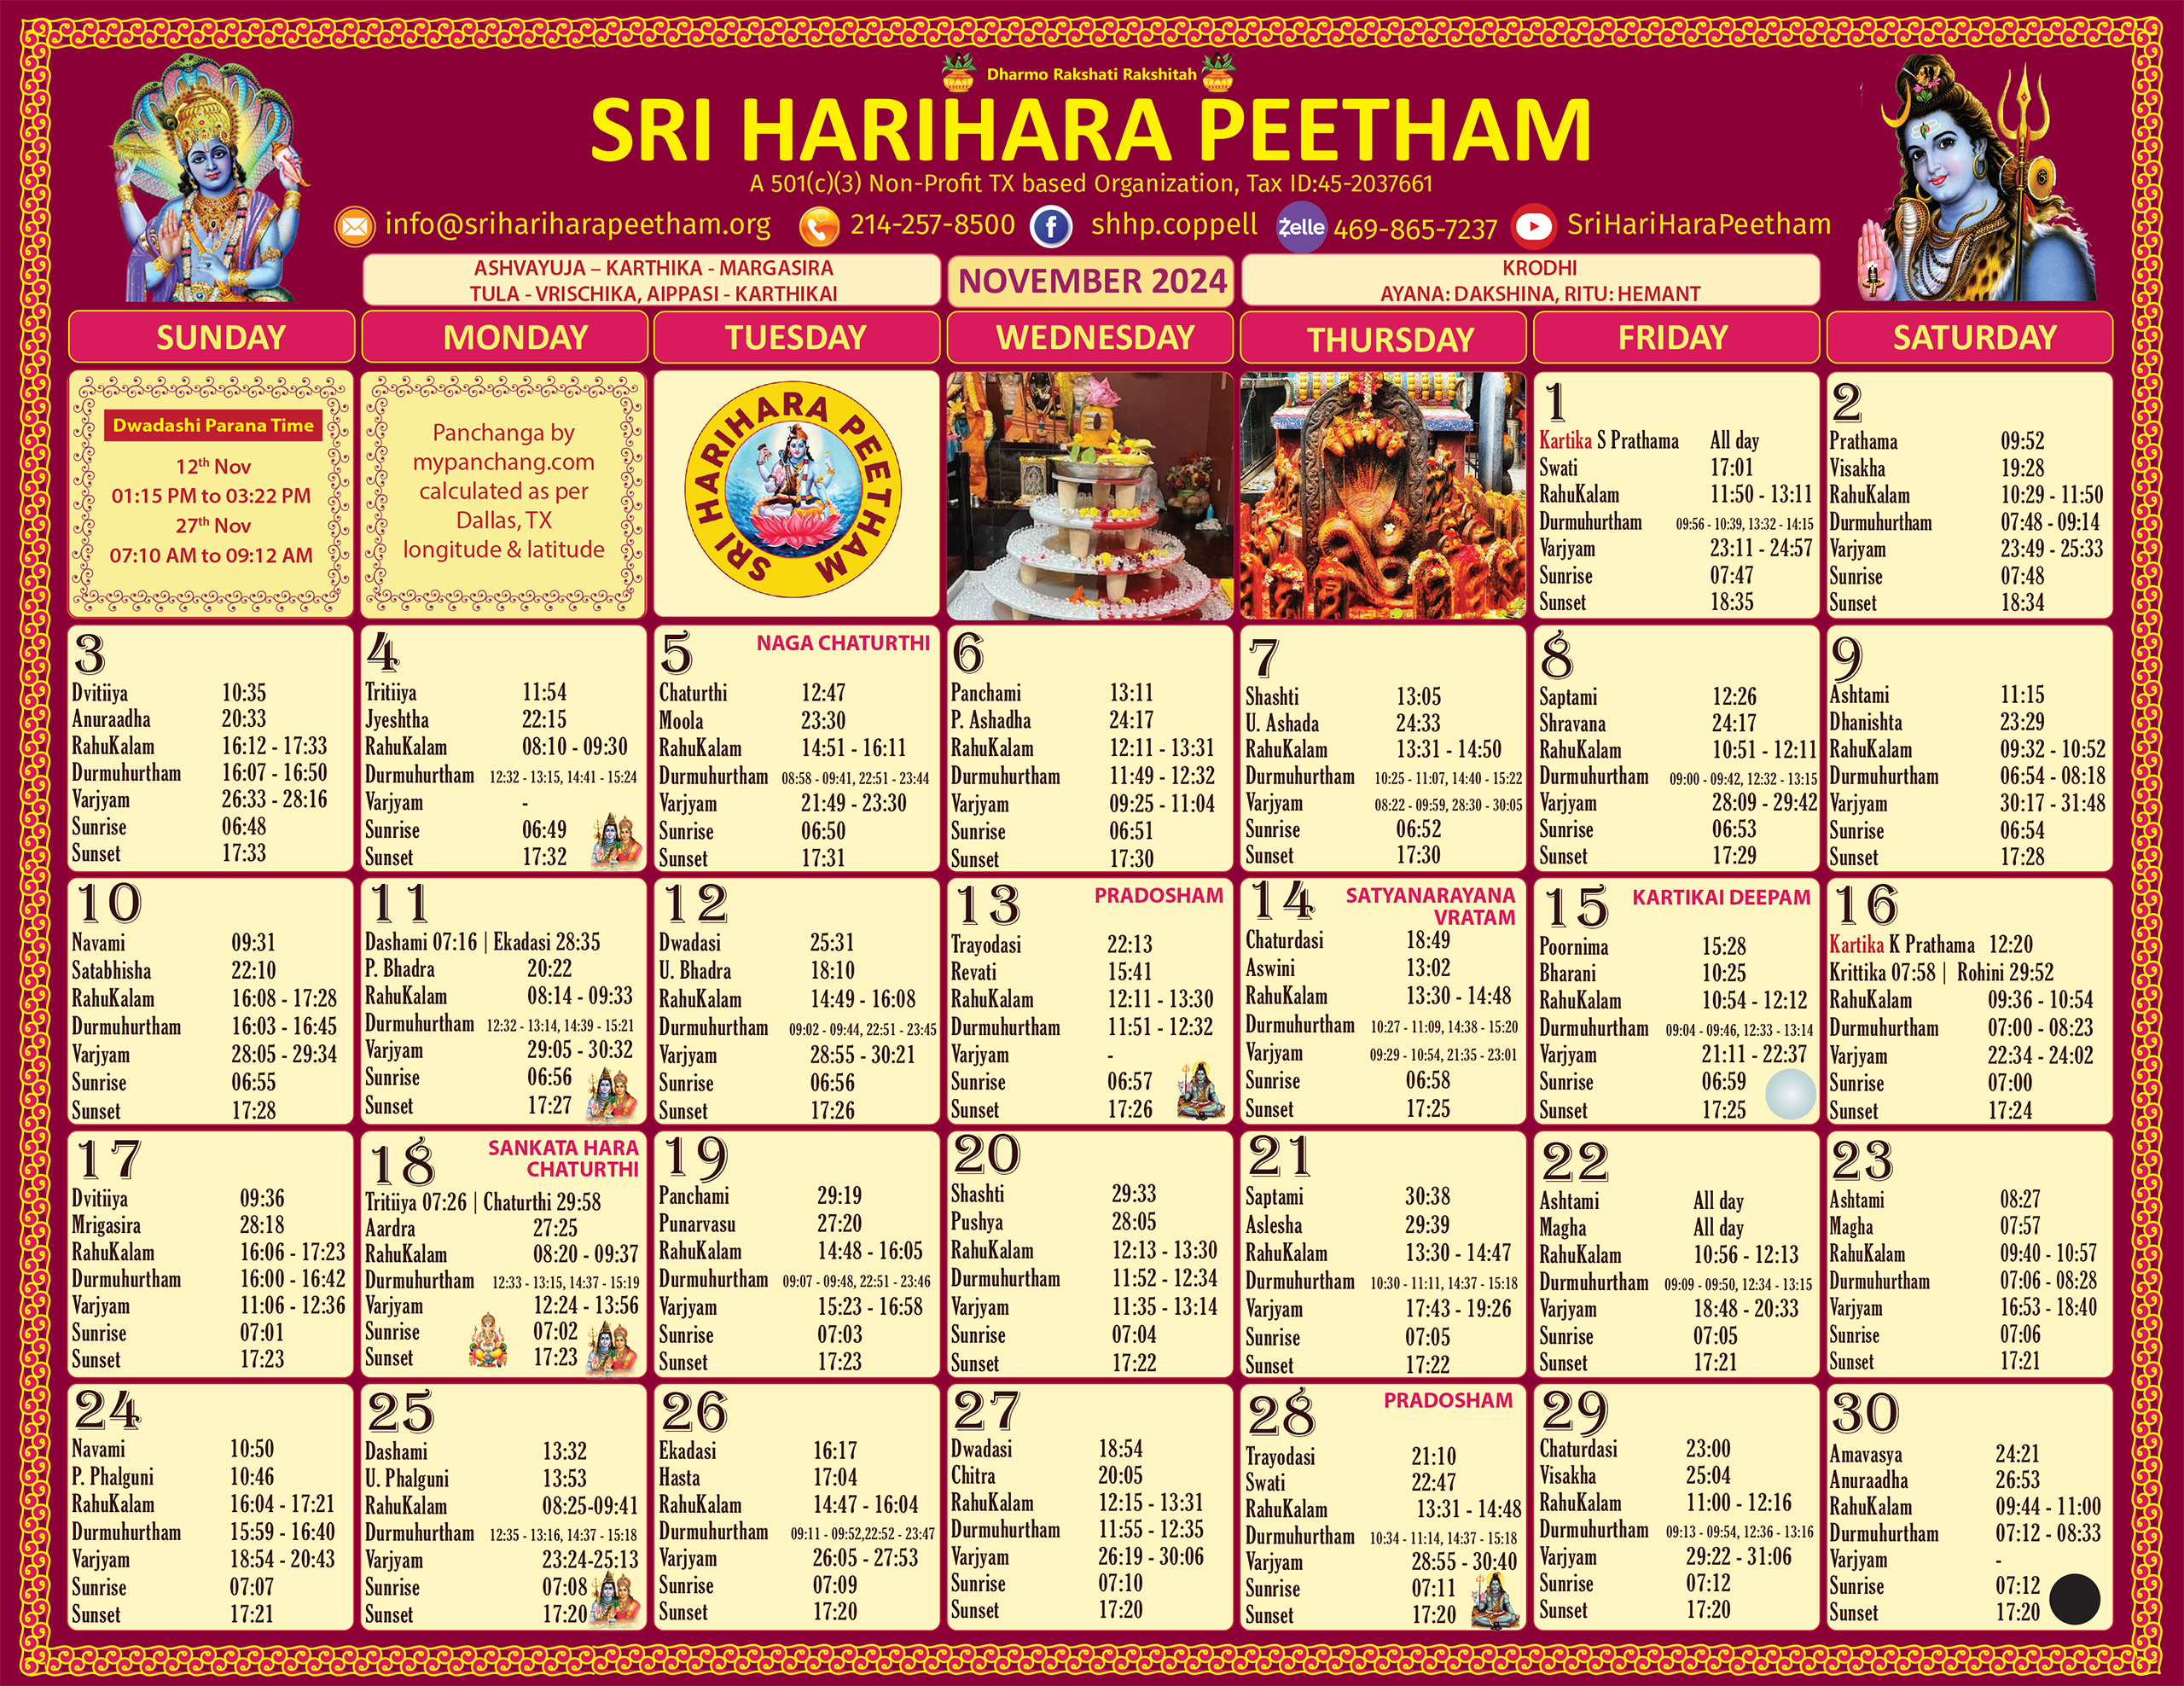 Sri HariHara Peetham's November 2024 calendar page